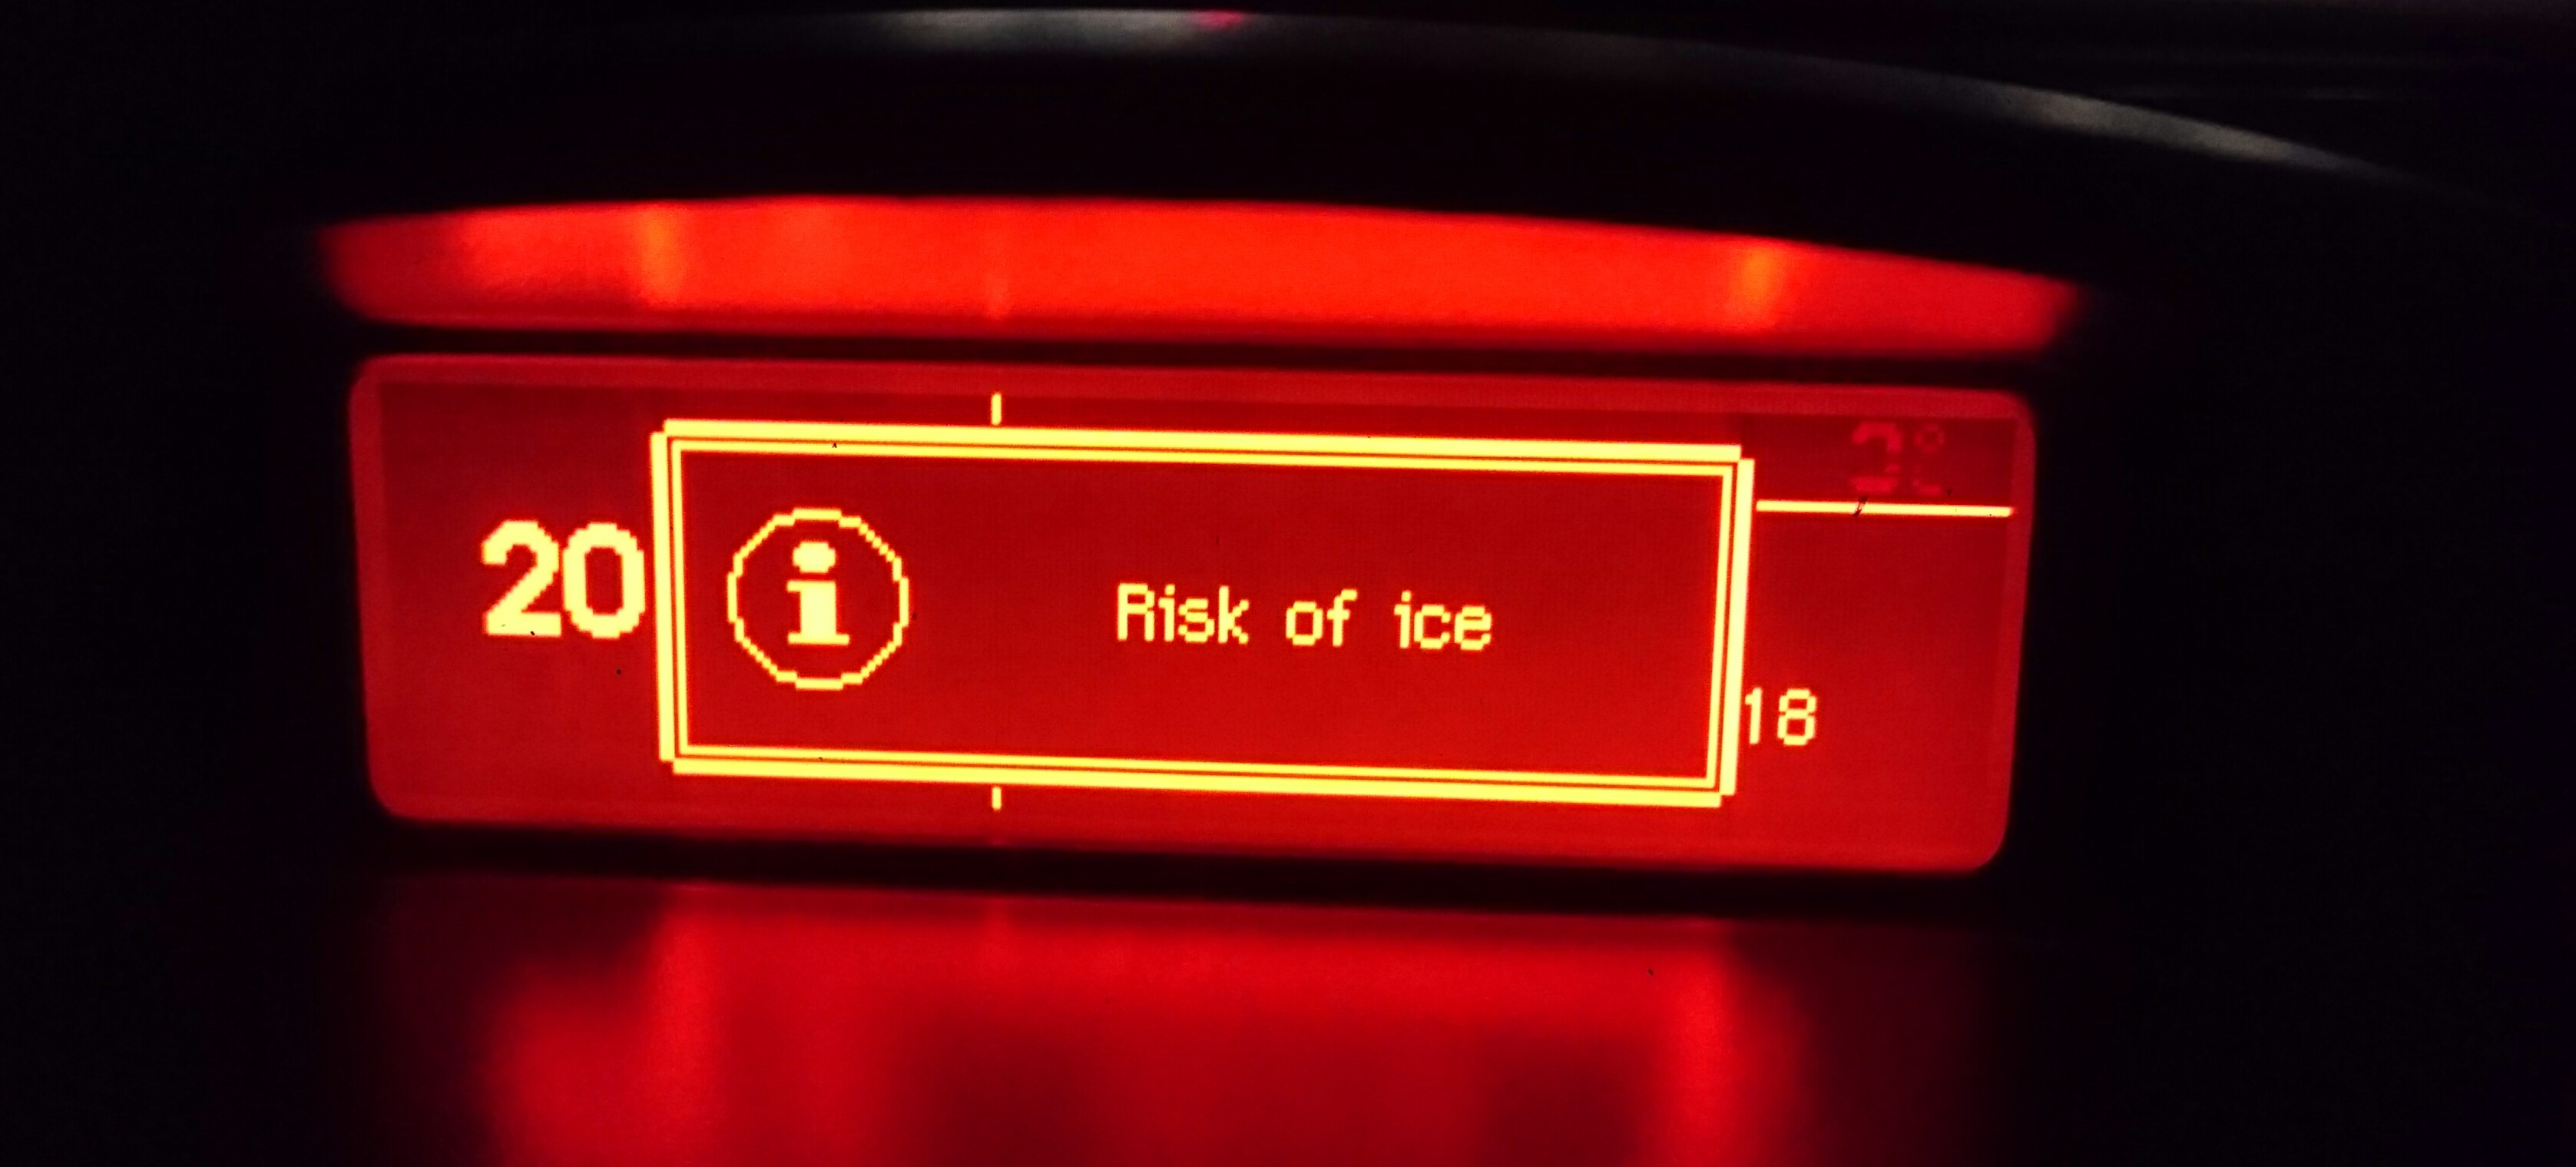 『Risk of ice』のシーズン到来。